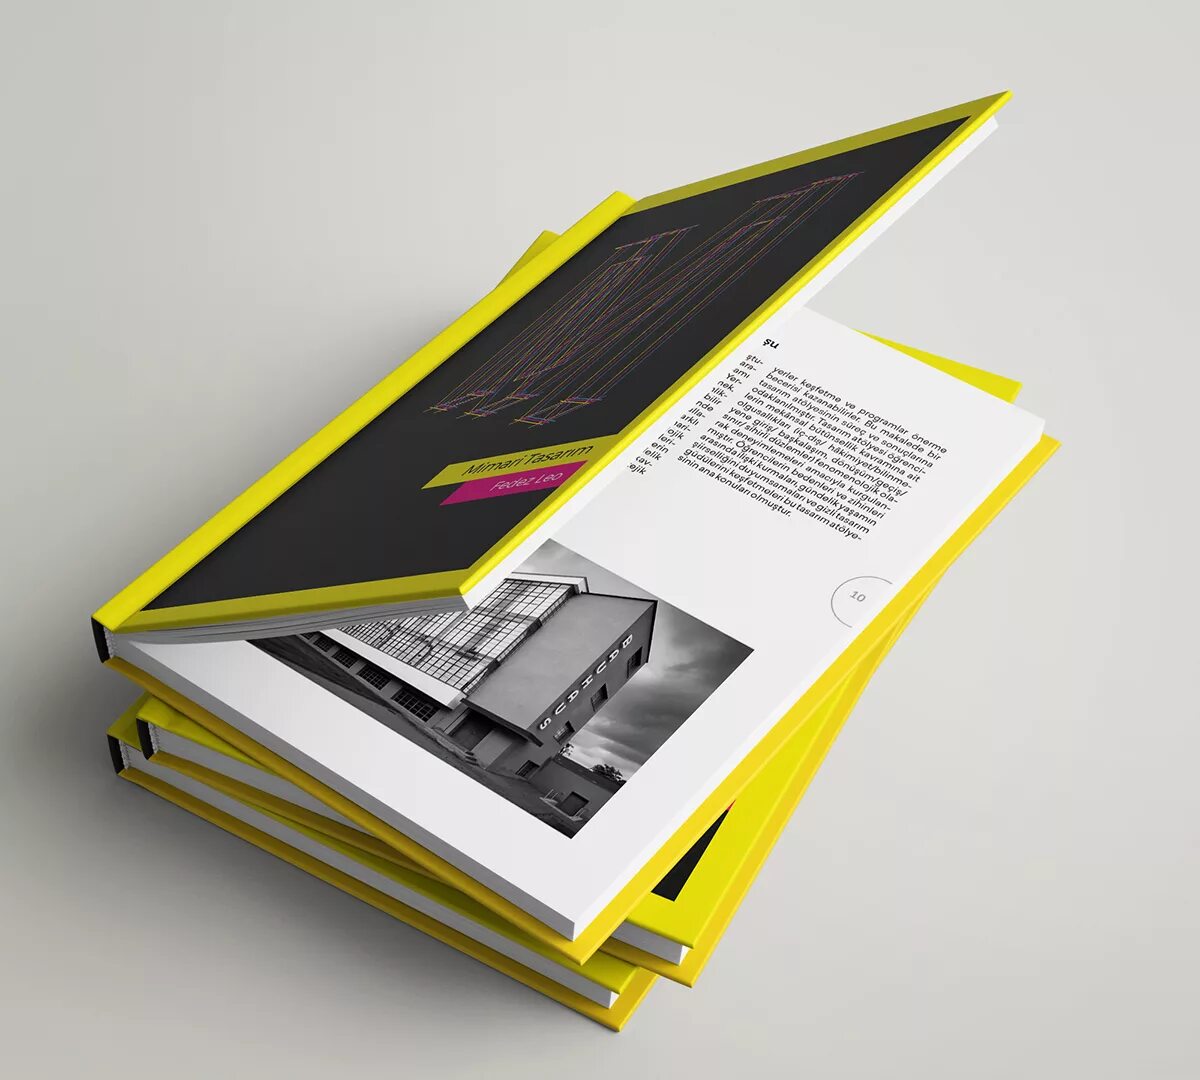 Architecture book. Обложка книги дизайн. Креативные обложки книг. Дизайн обложки книги Handbook. Современные обложки книг дизайн.